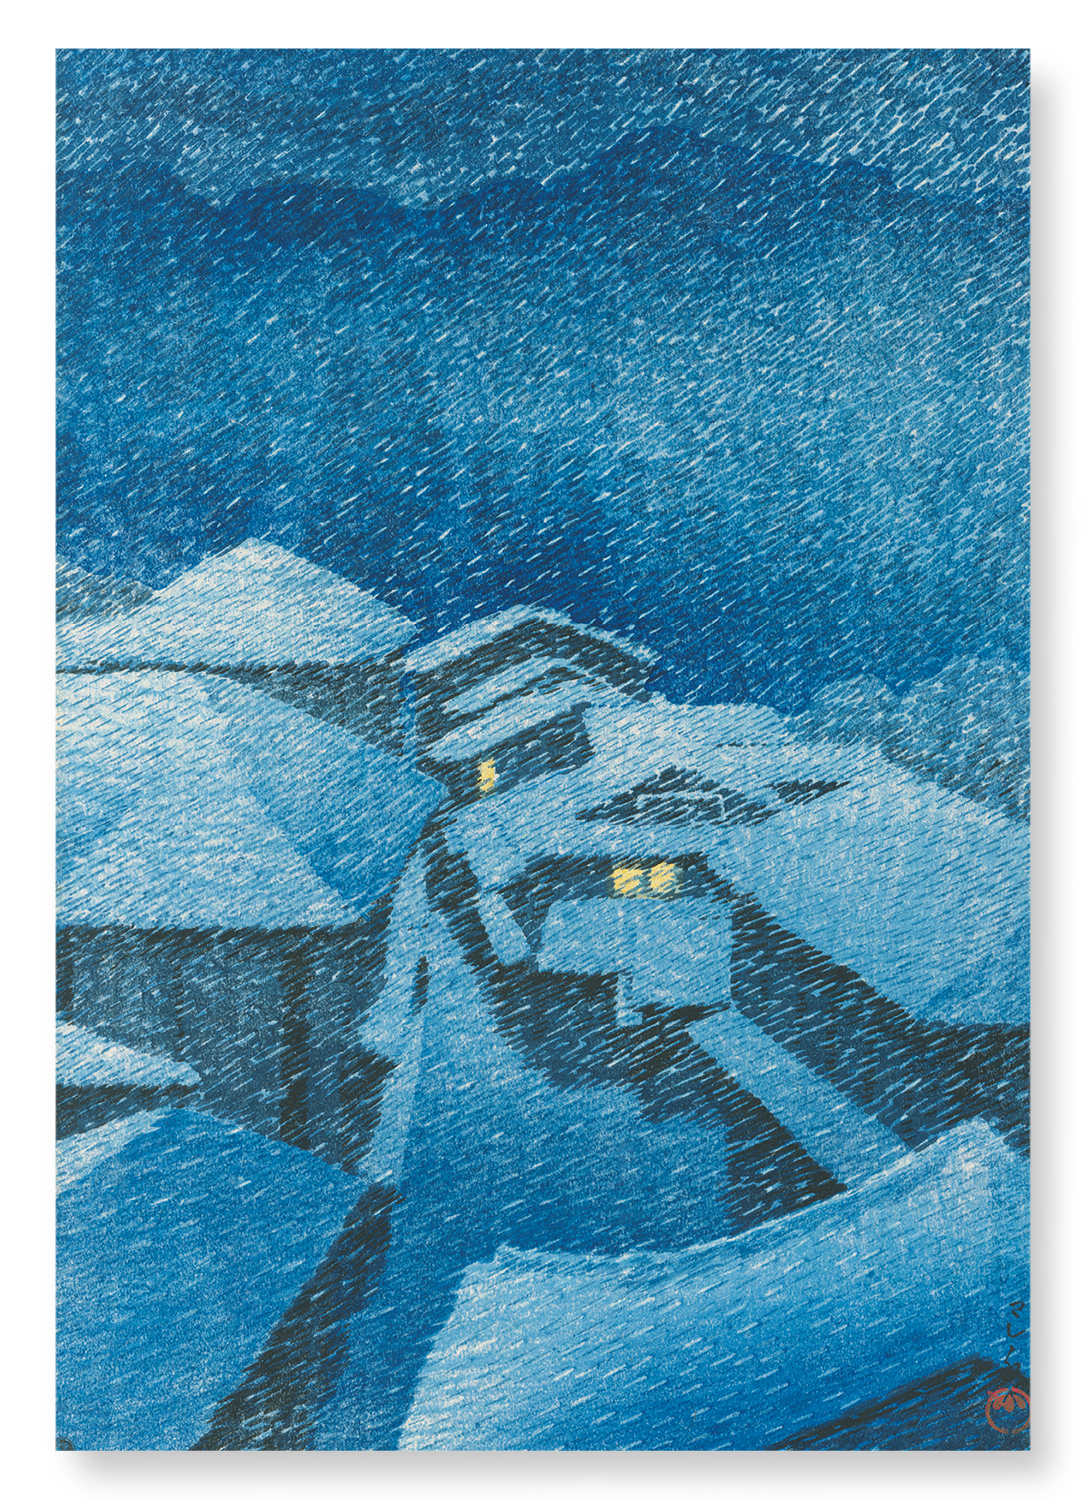 SHIOBARA IN SNOWSTORM: Japanese Art Print